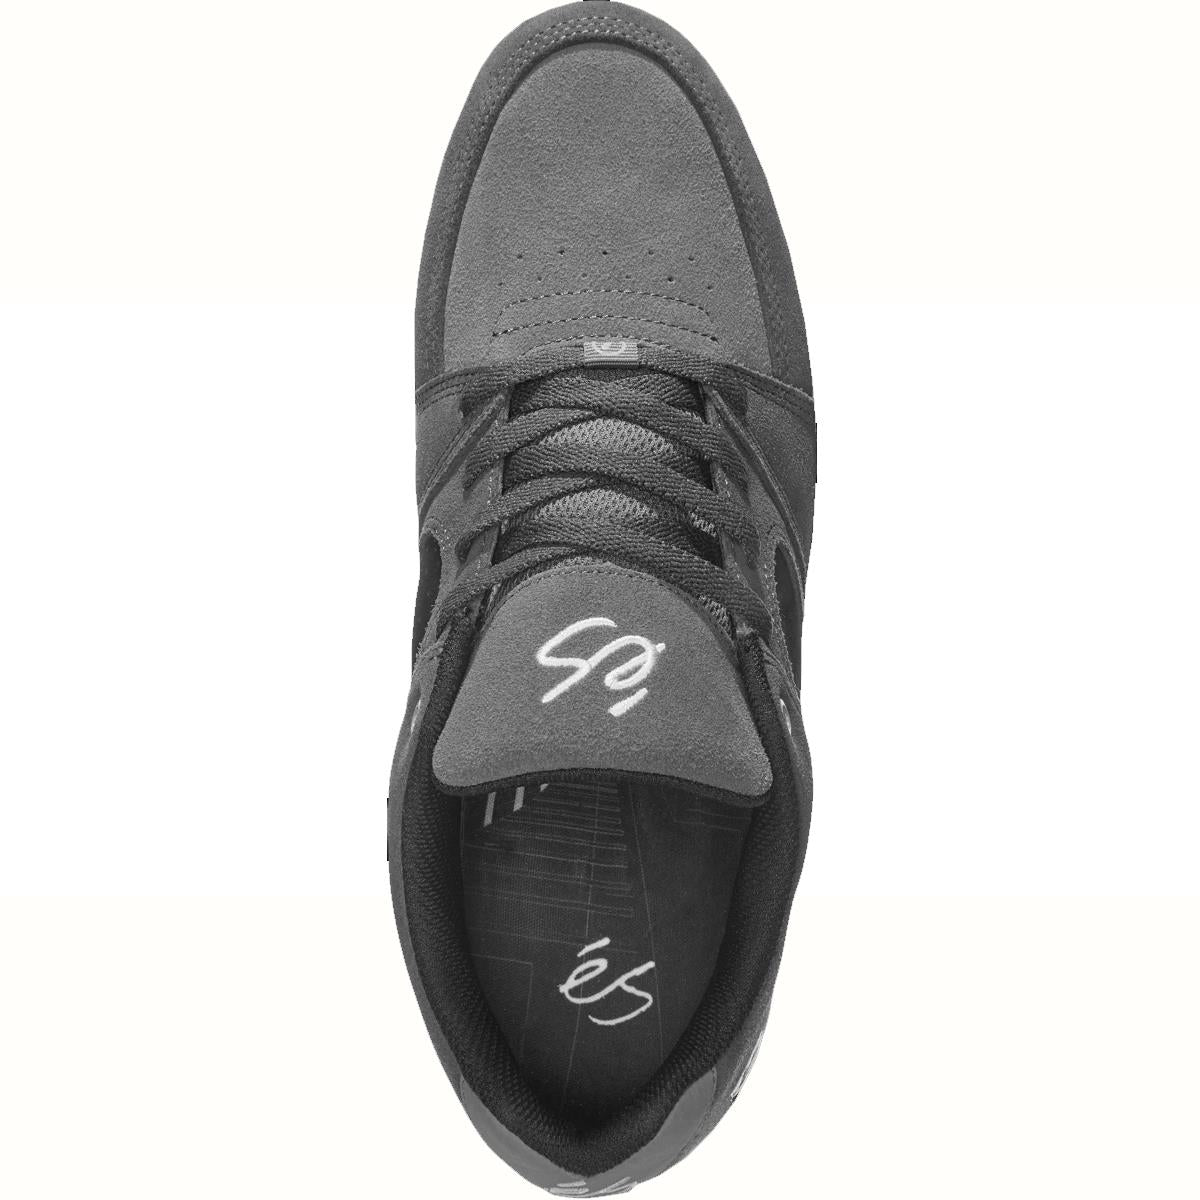 E's Accel Slim X Sants Grey Black Skate Shoes – Black Sheep Store